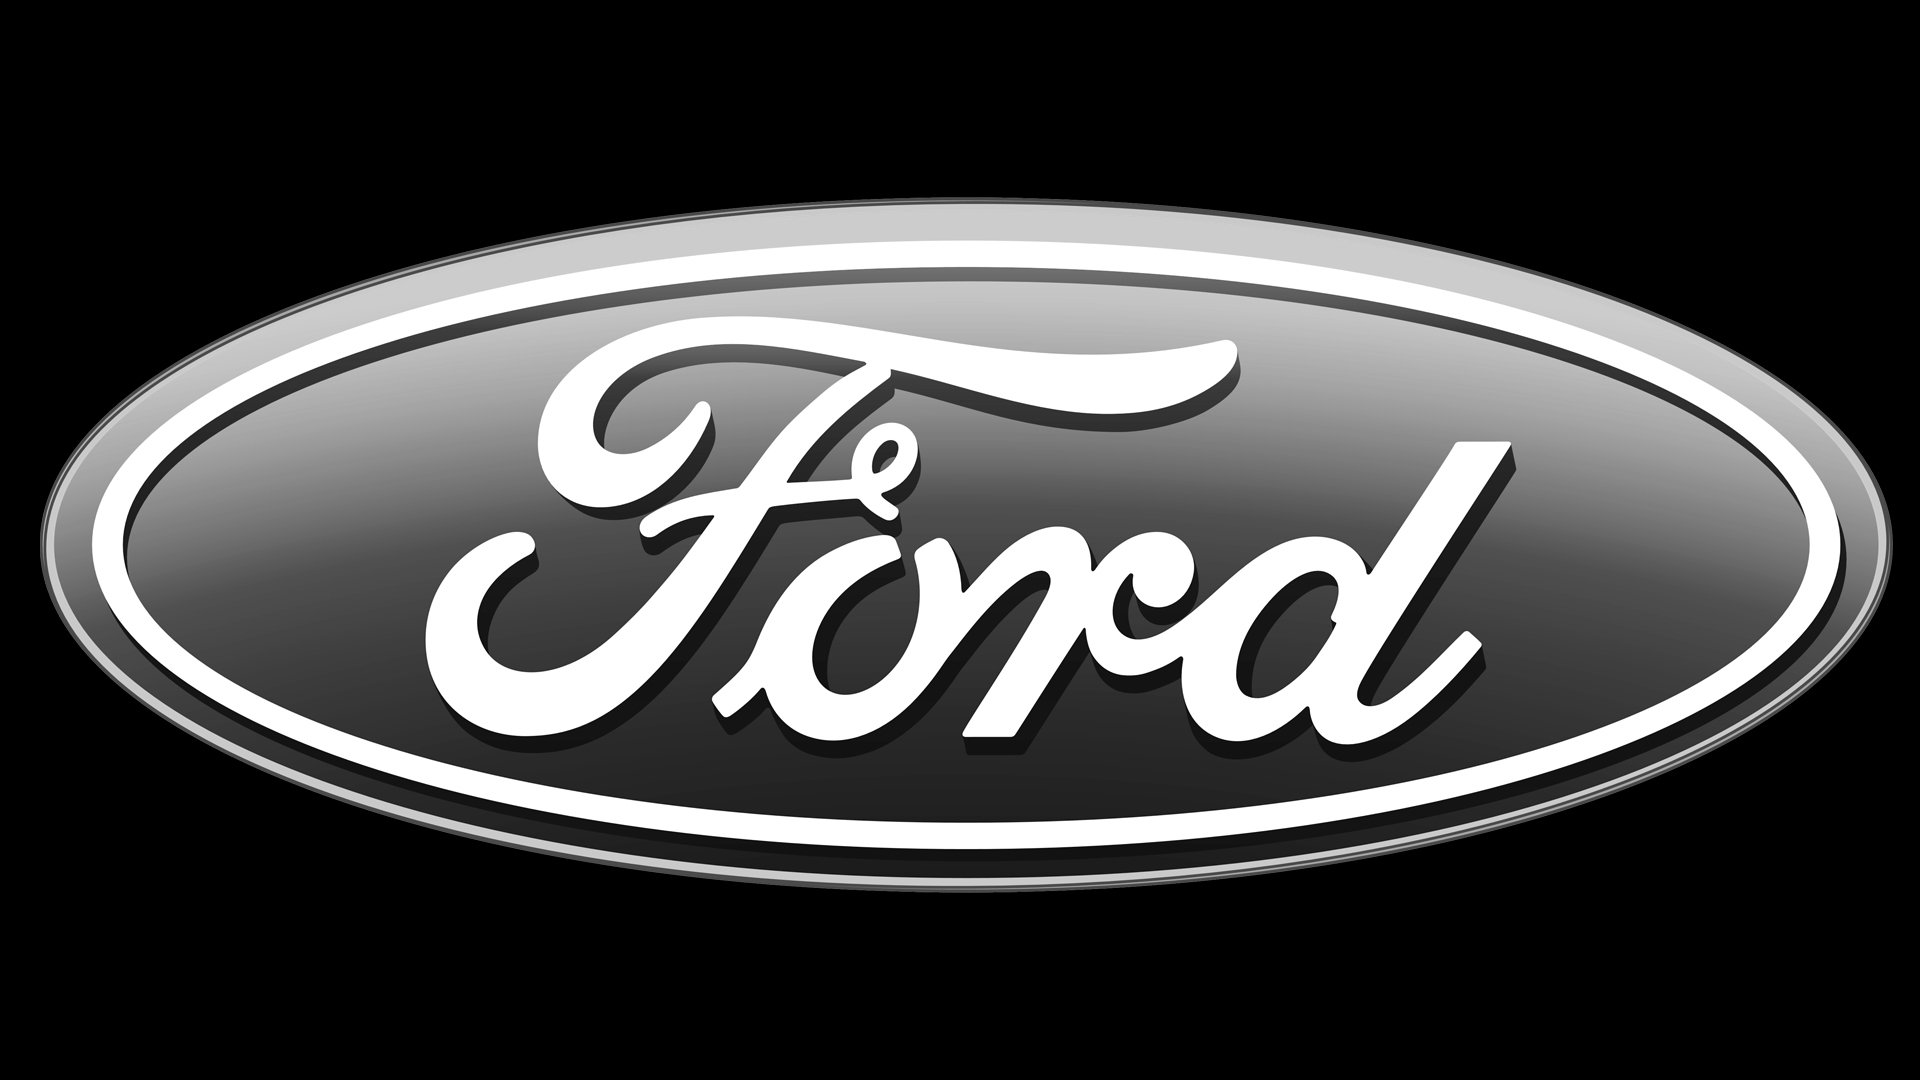 Ford logo  Ford, Arabalar, Araba